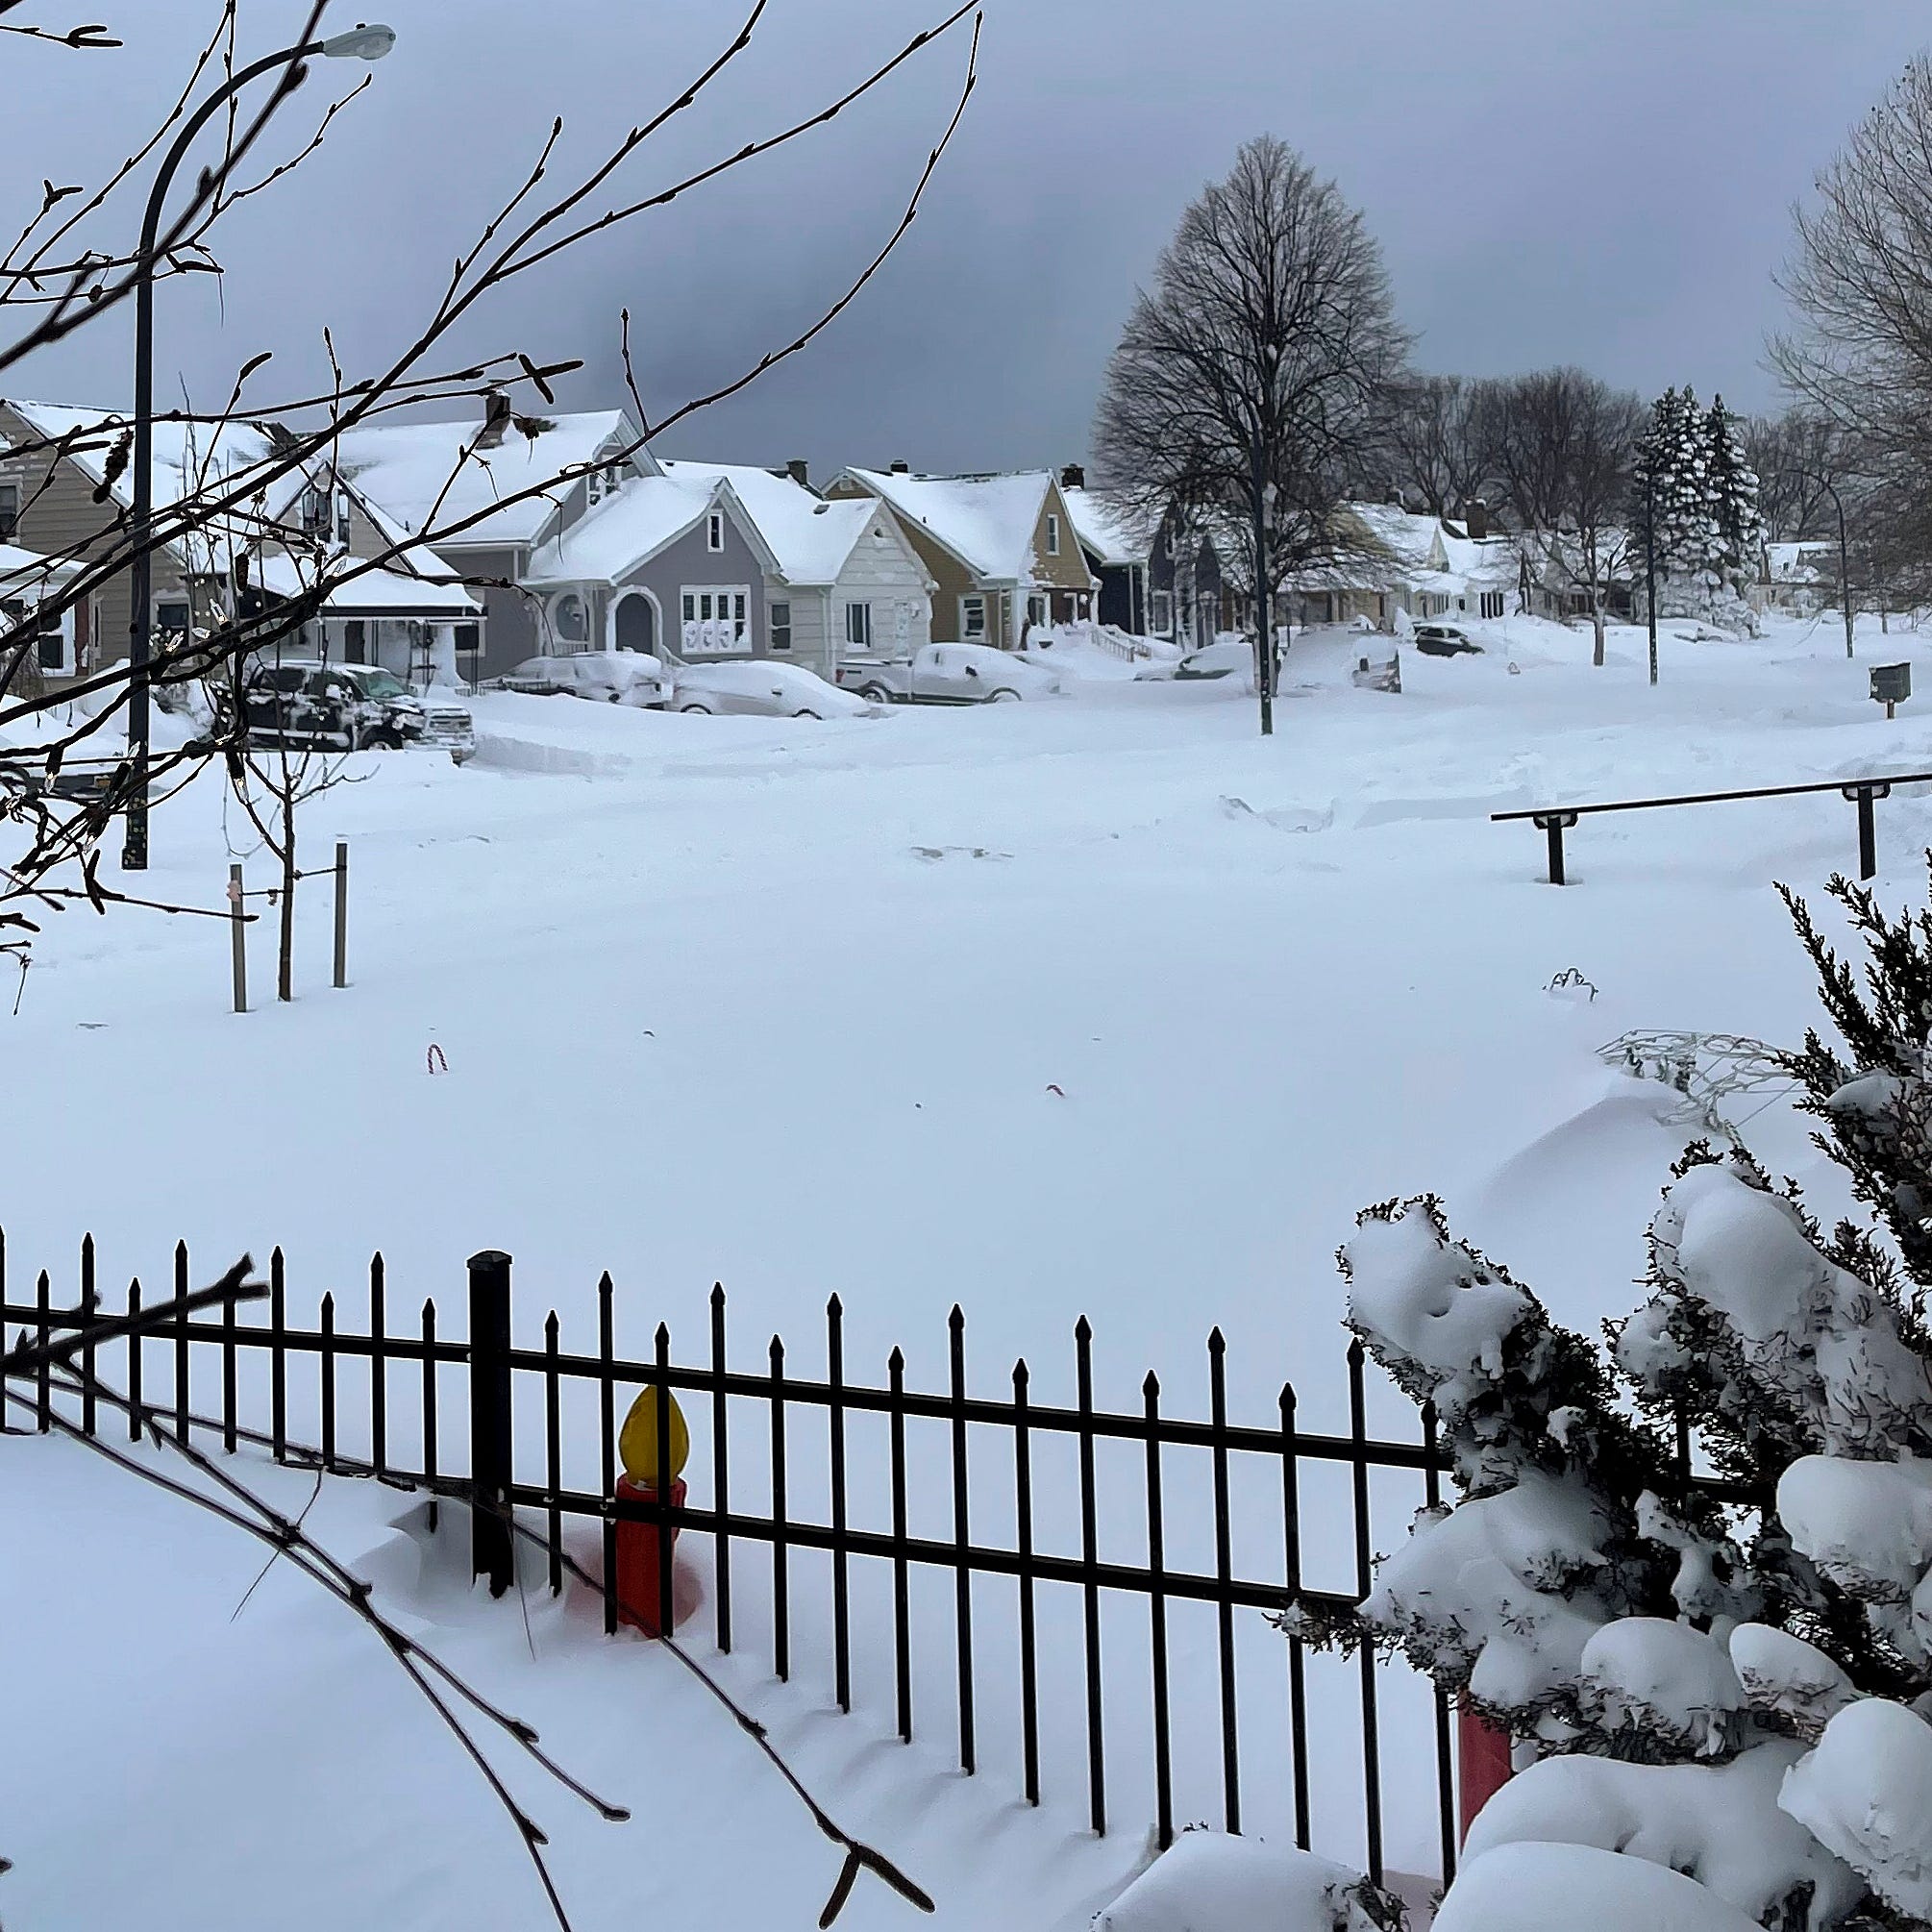 Snow blankets a neighborhood on Christmas Day in Buffalo, N.Y.